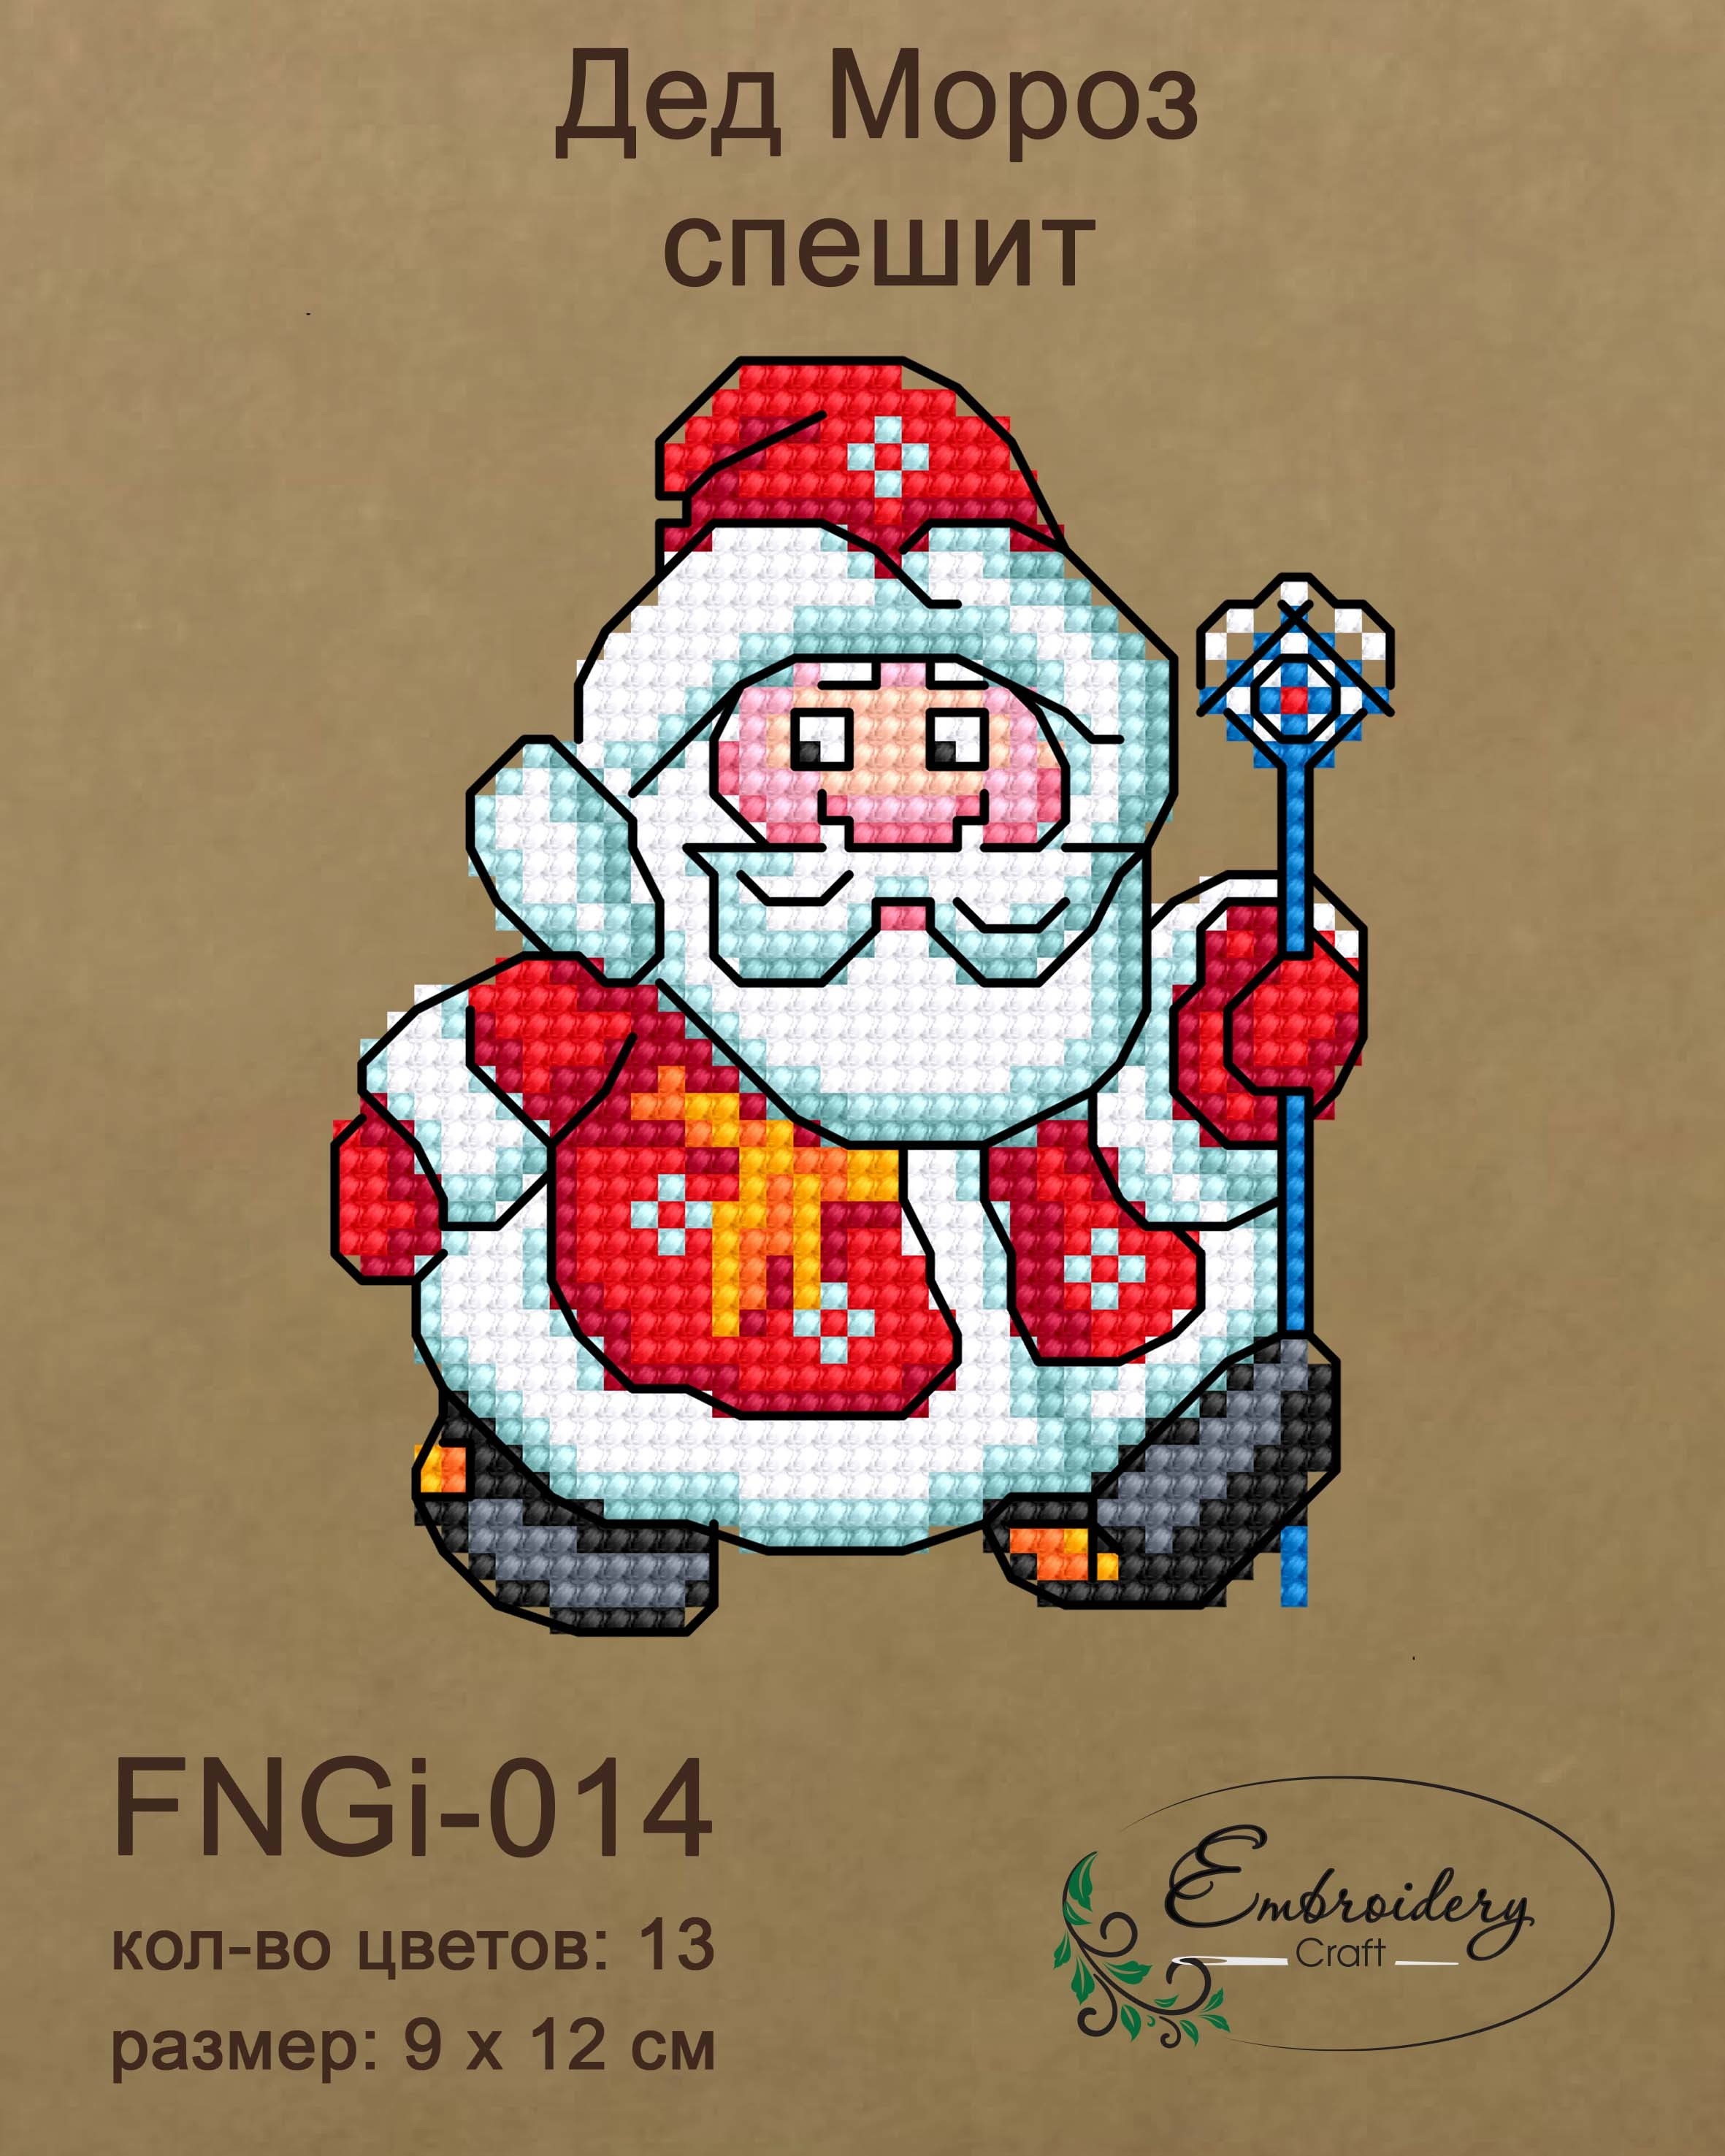 FNNGi-014 Дед Мороз спешит